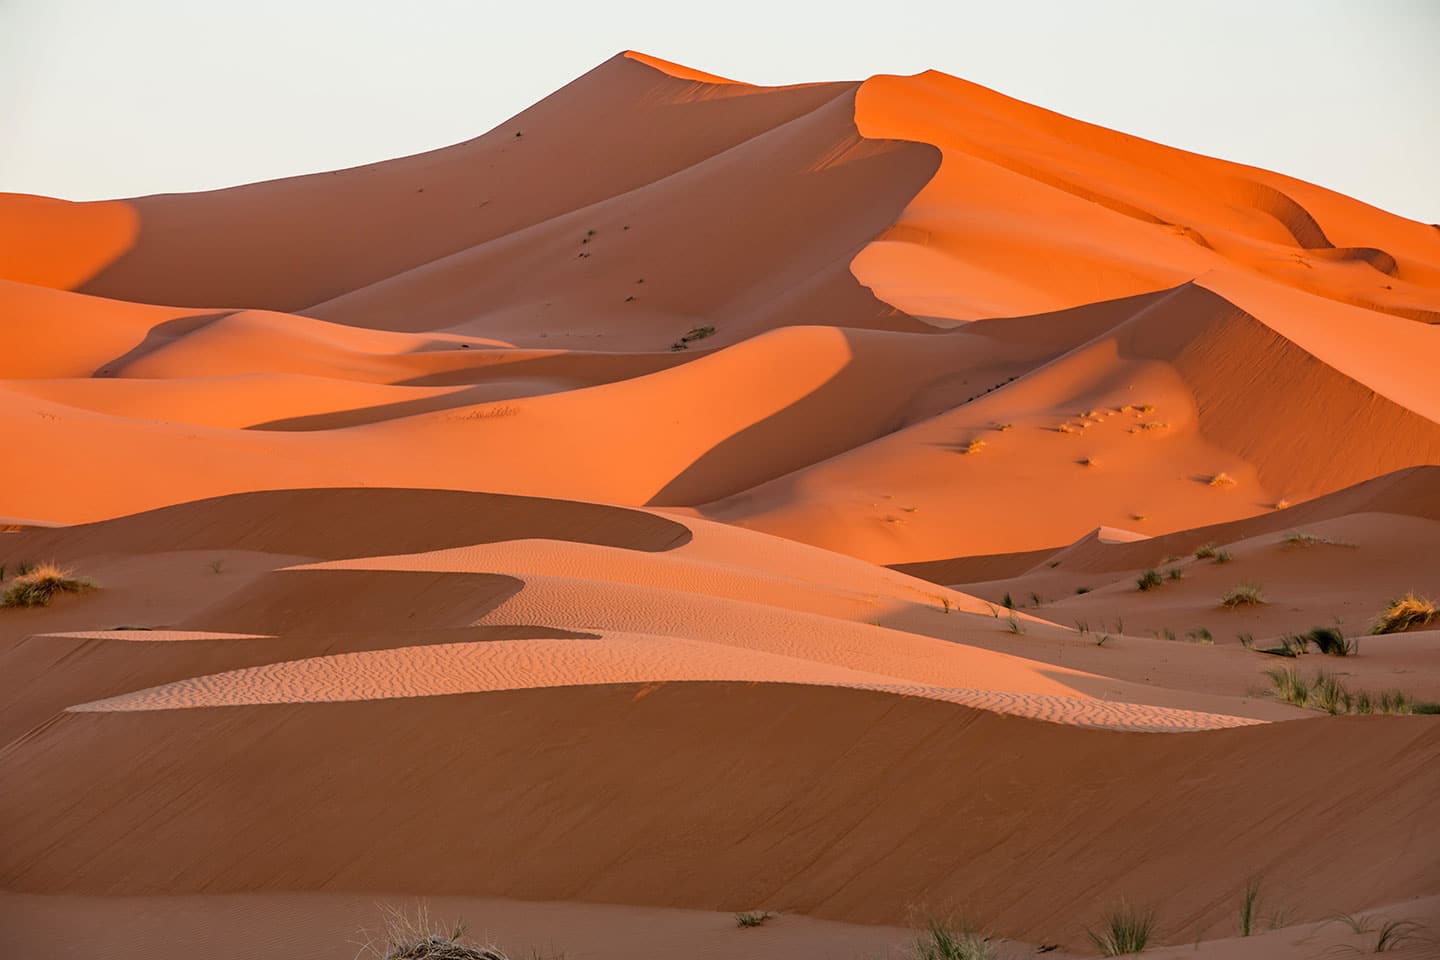 Sunset over the giant sand dunes of the Sahara Desert in Morocco